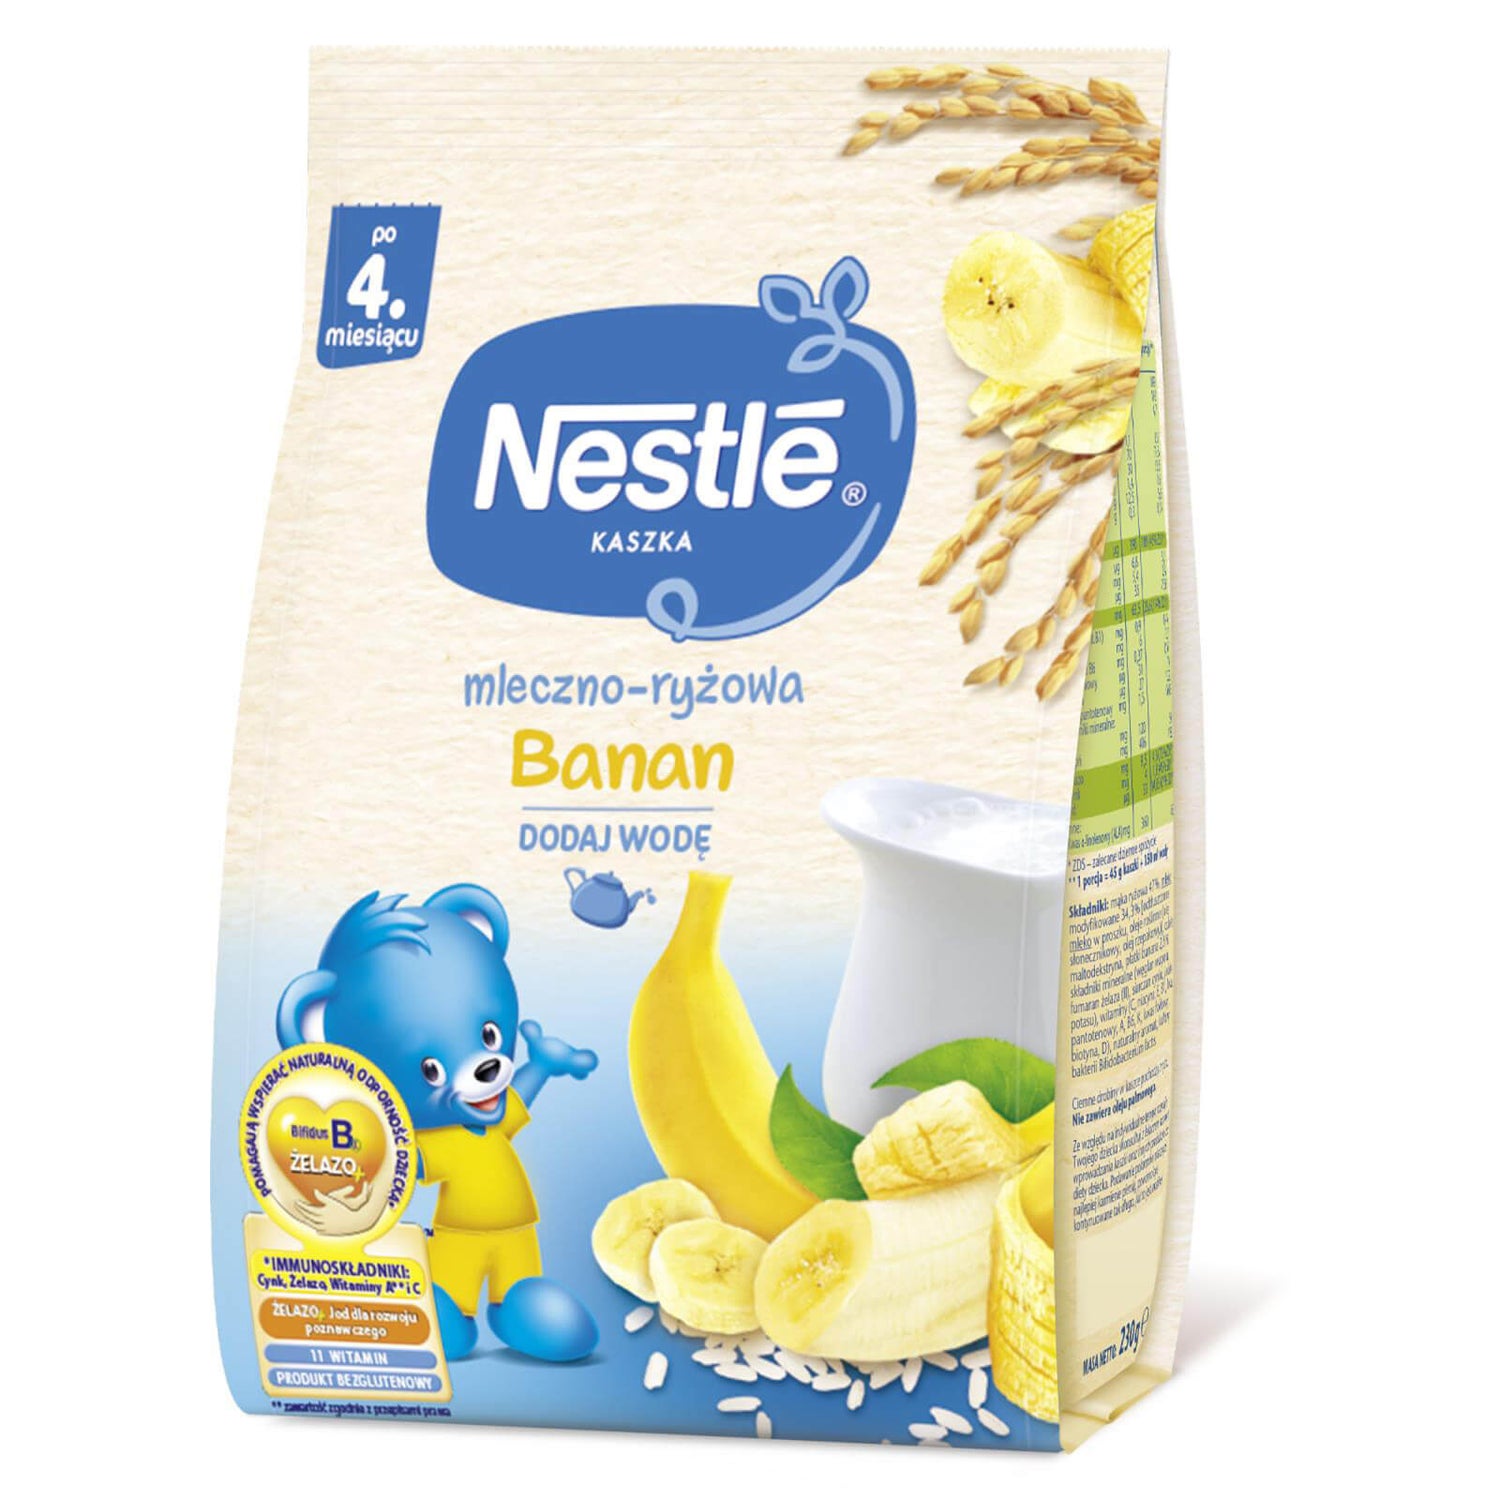 Nestlé Kaszka mleczno-ryżowa Banan - 230g